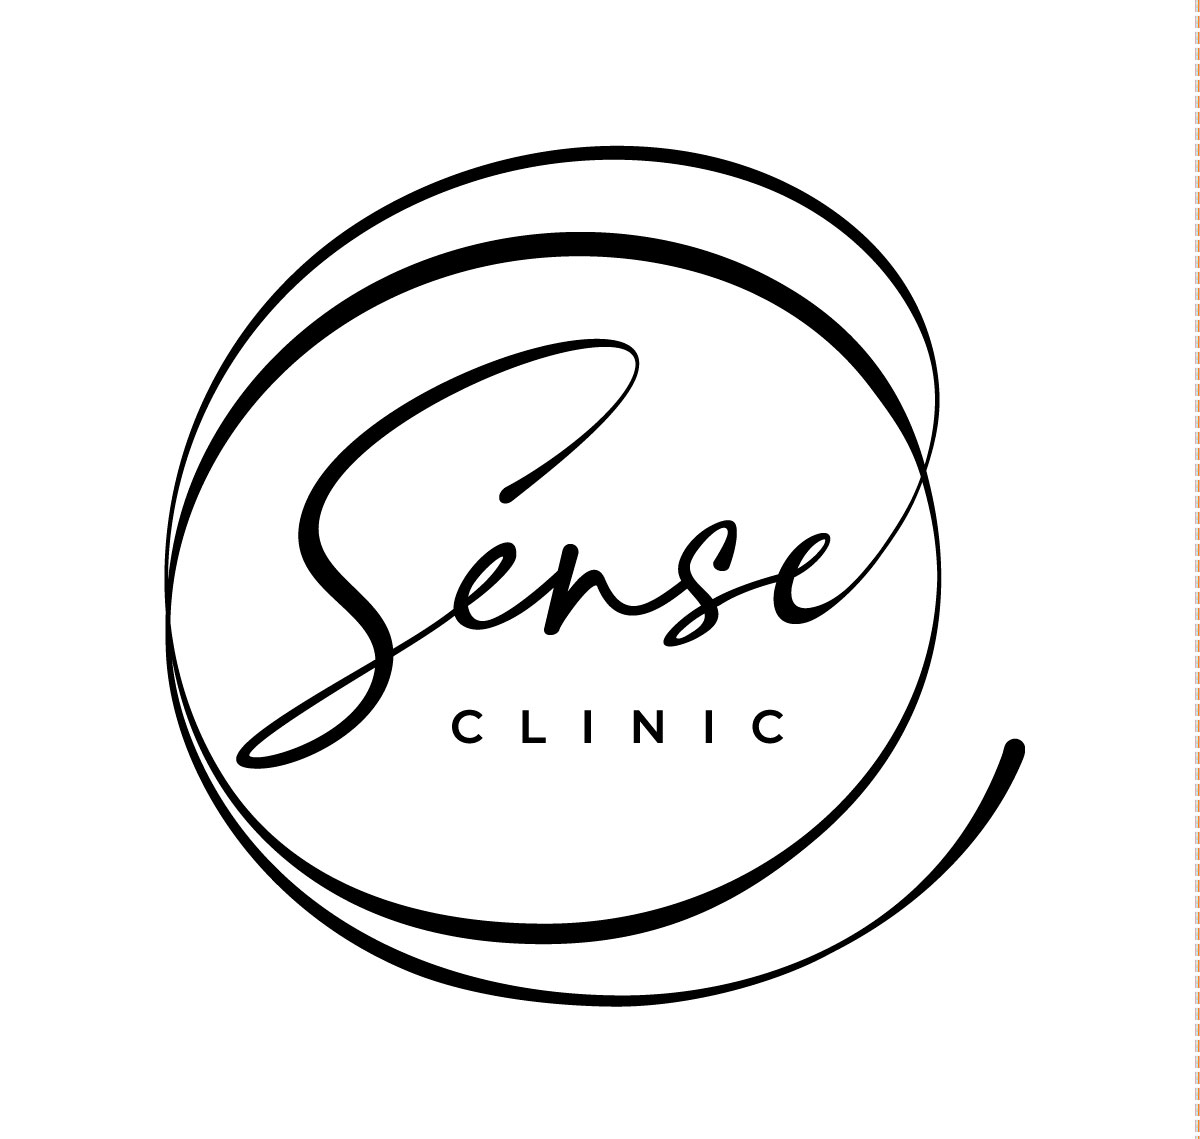 Sense clinic